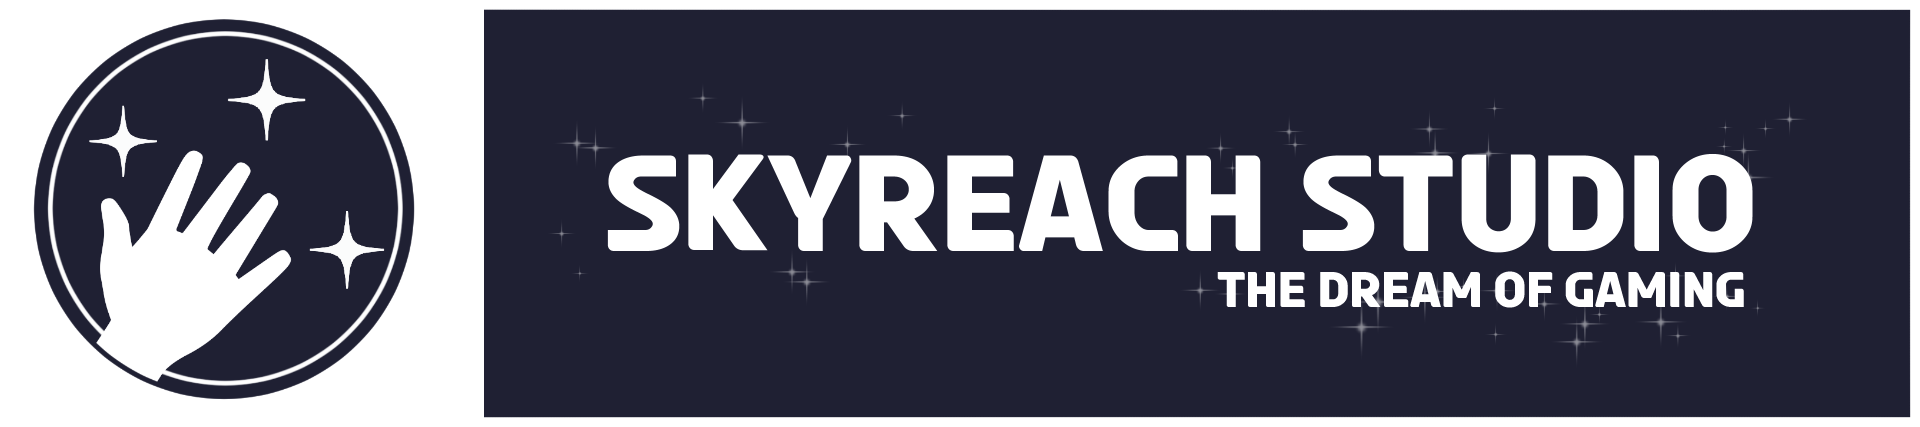 SkyReach Studio header